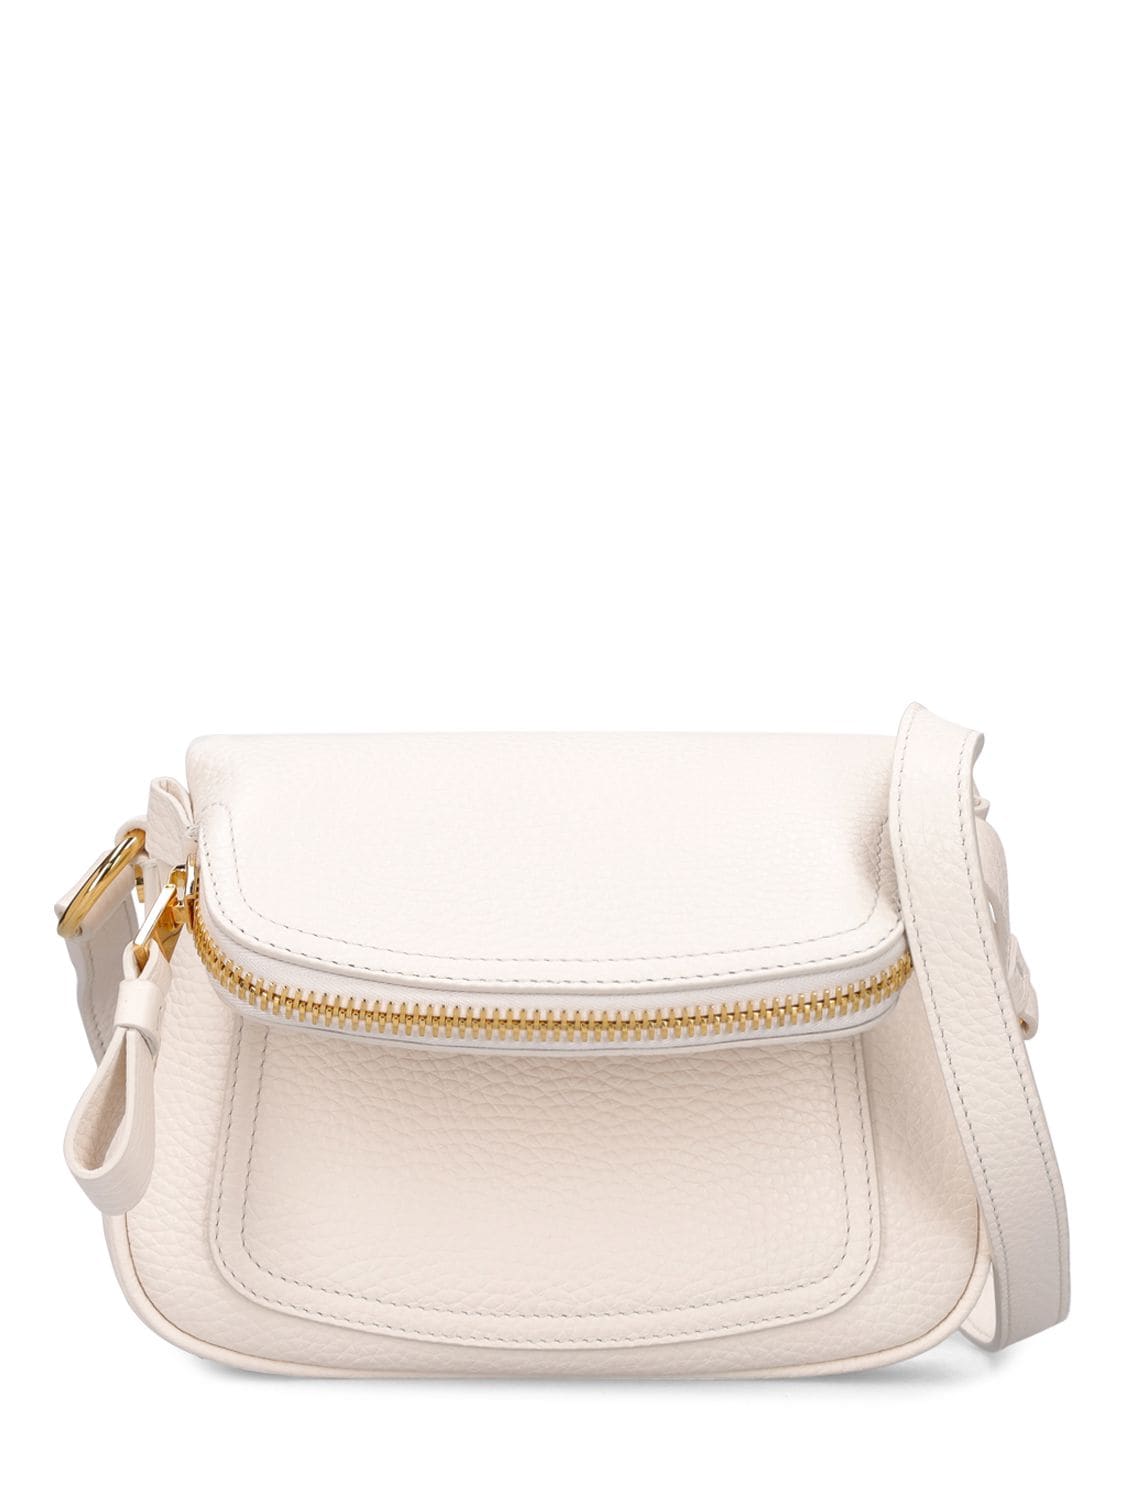 Tom Ford Mini Jennyfer Leather Shoulder Bag In White